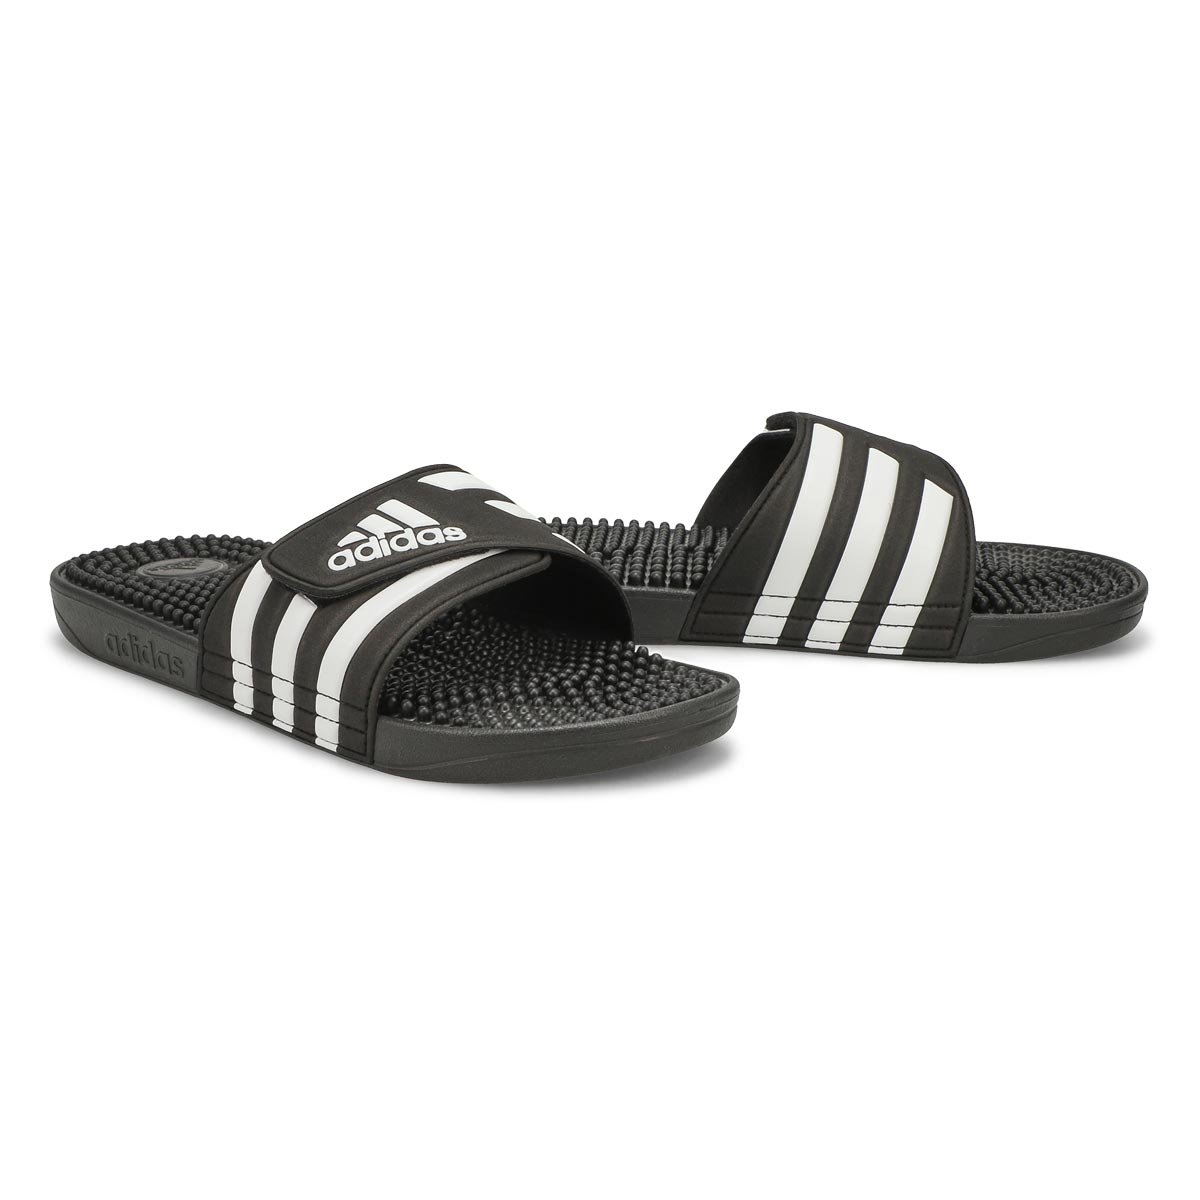 adidas Men's Adissage Slide Sandal - Black/Wh | SoftMoc.com